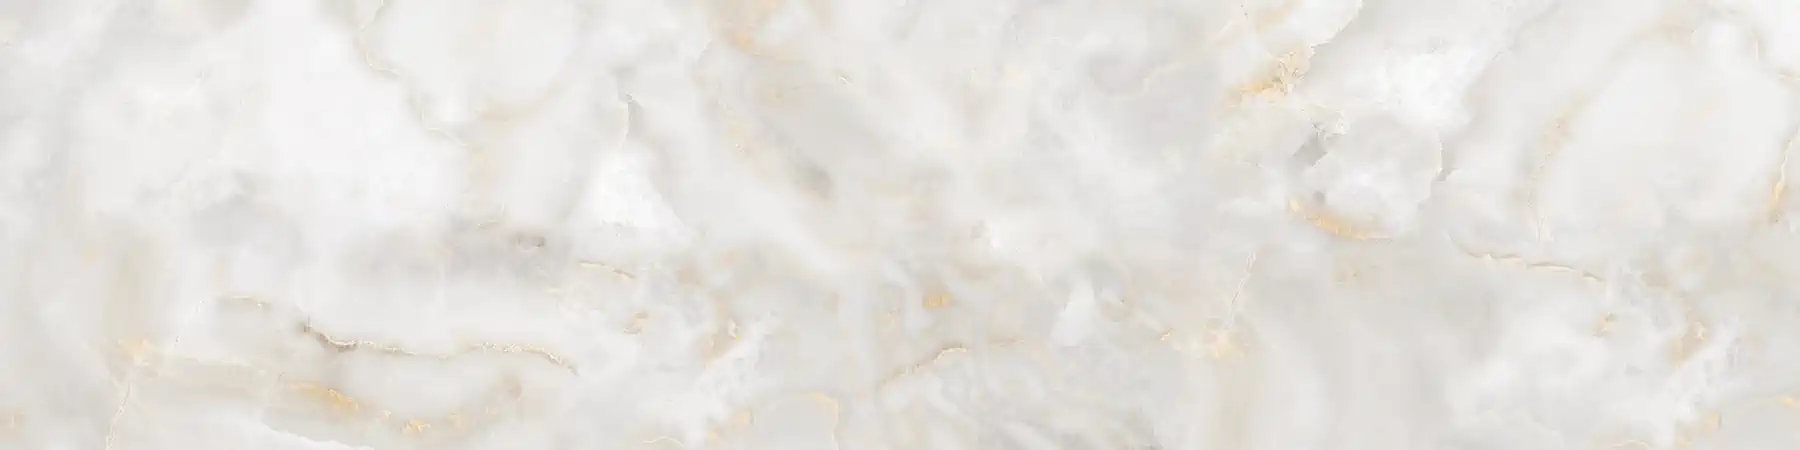 PlateART Küchenrückwand Motiv Marmor beige weiß